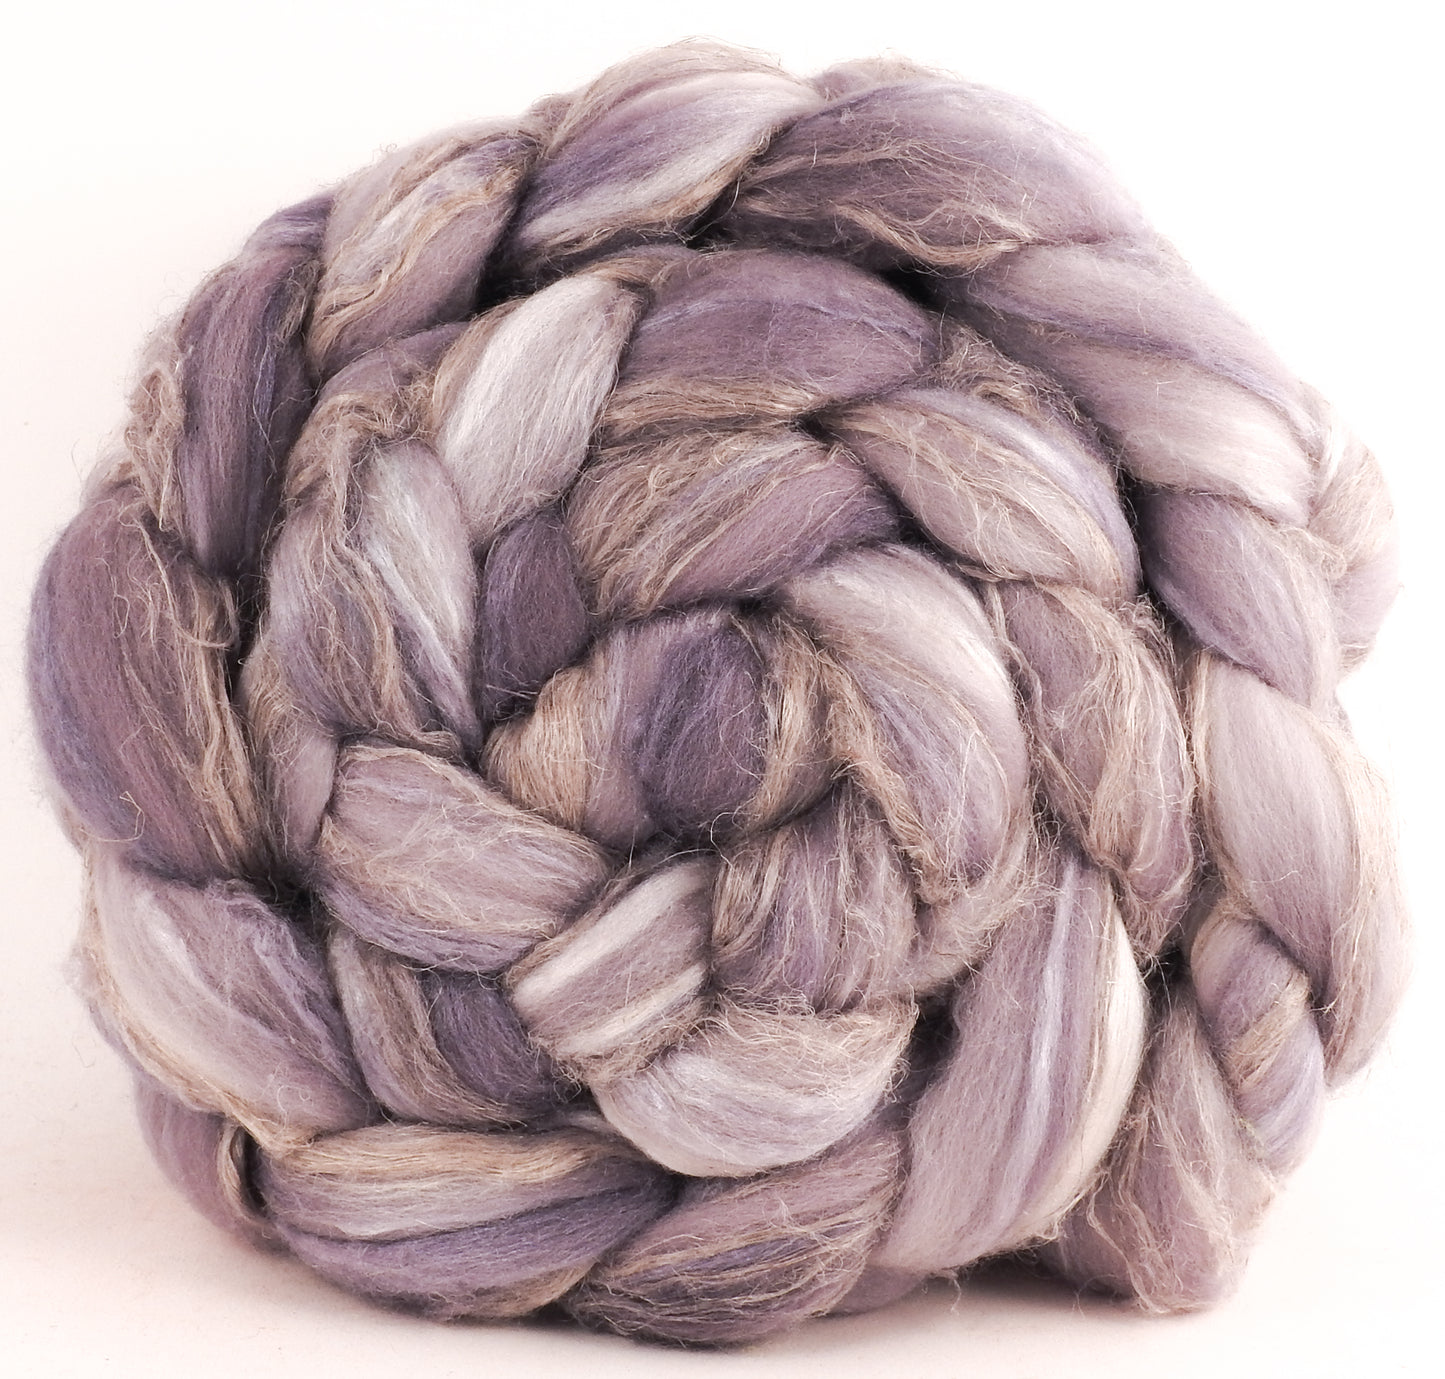 Merino/ Tussah Silk/ Natural Flax (50/25/25) -Whiskers - (5.6 oz.)